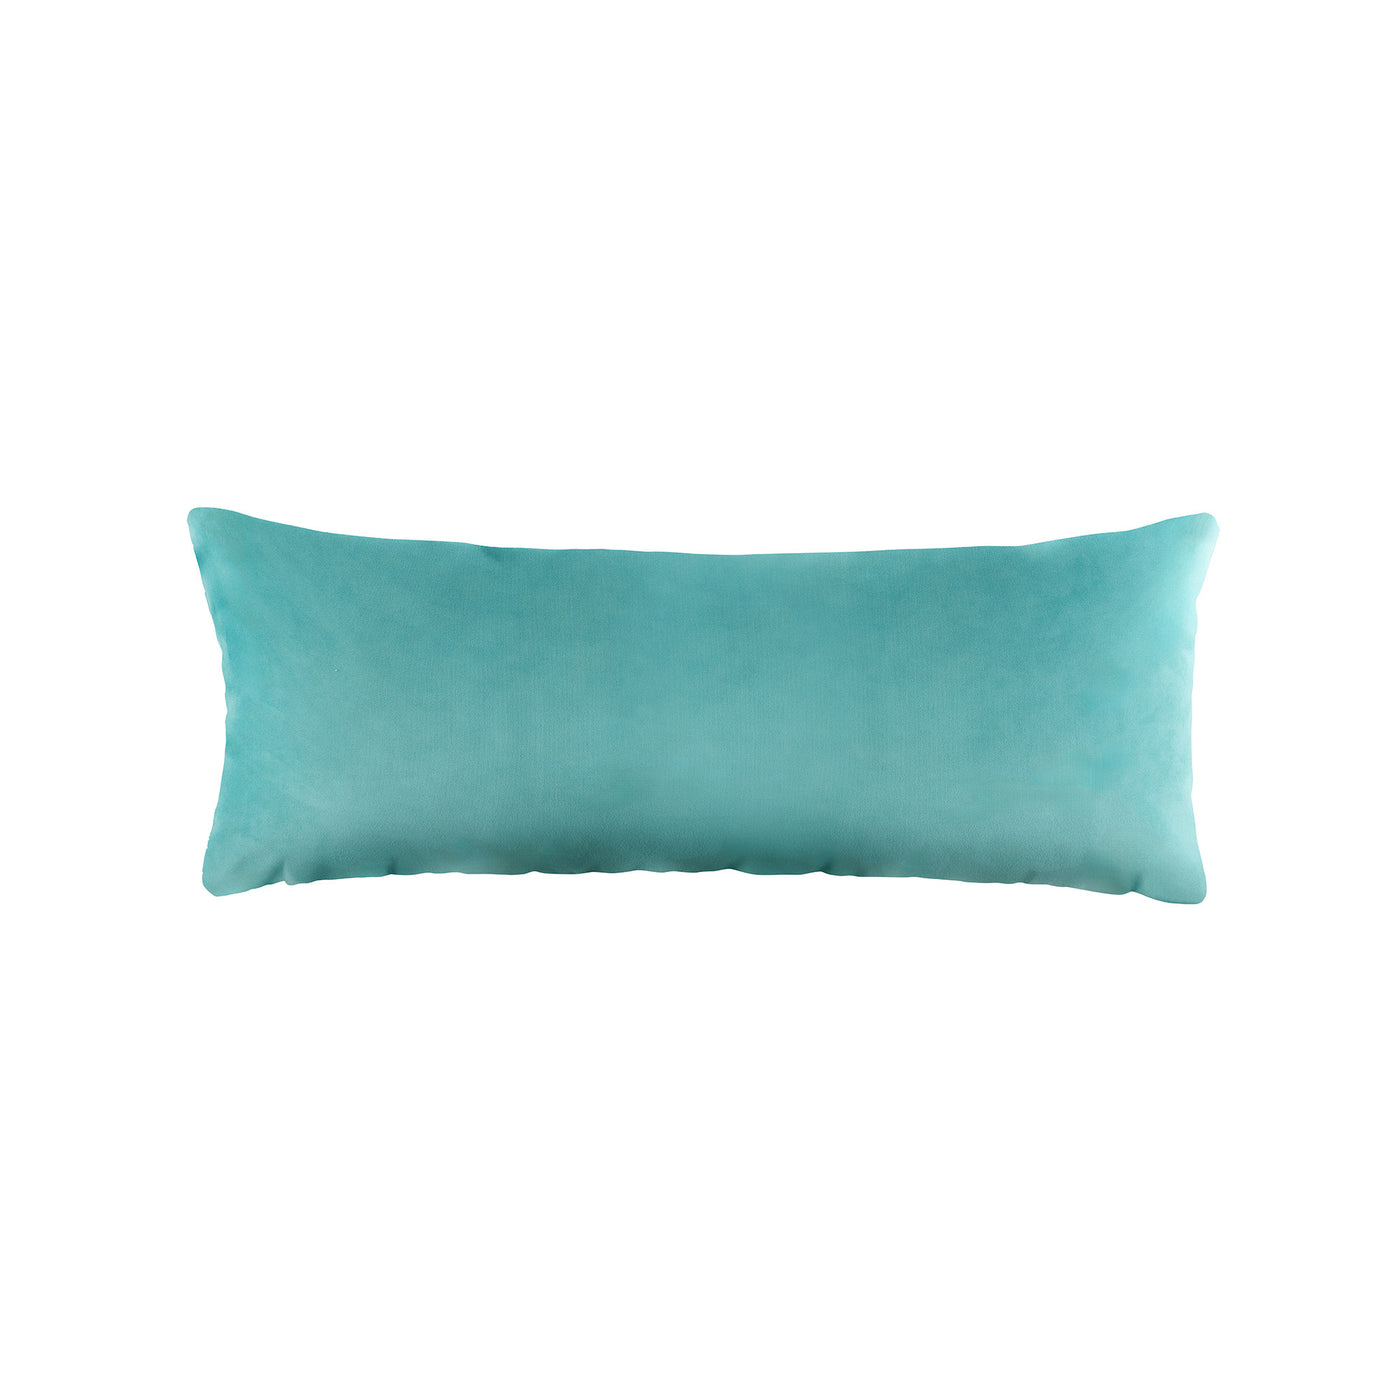 Vivid Bluebox Long Rectangle Pillow (18x46)